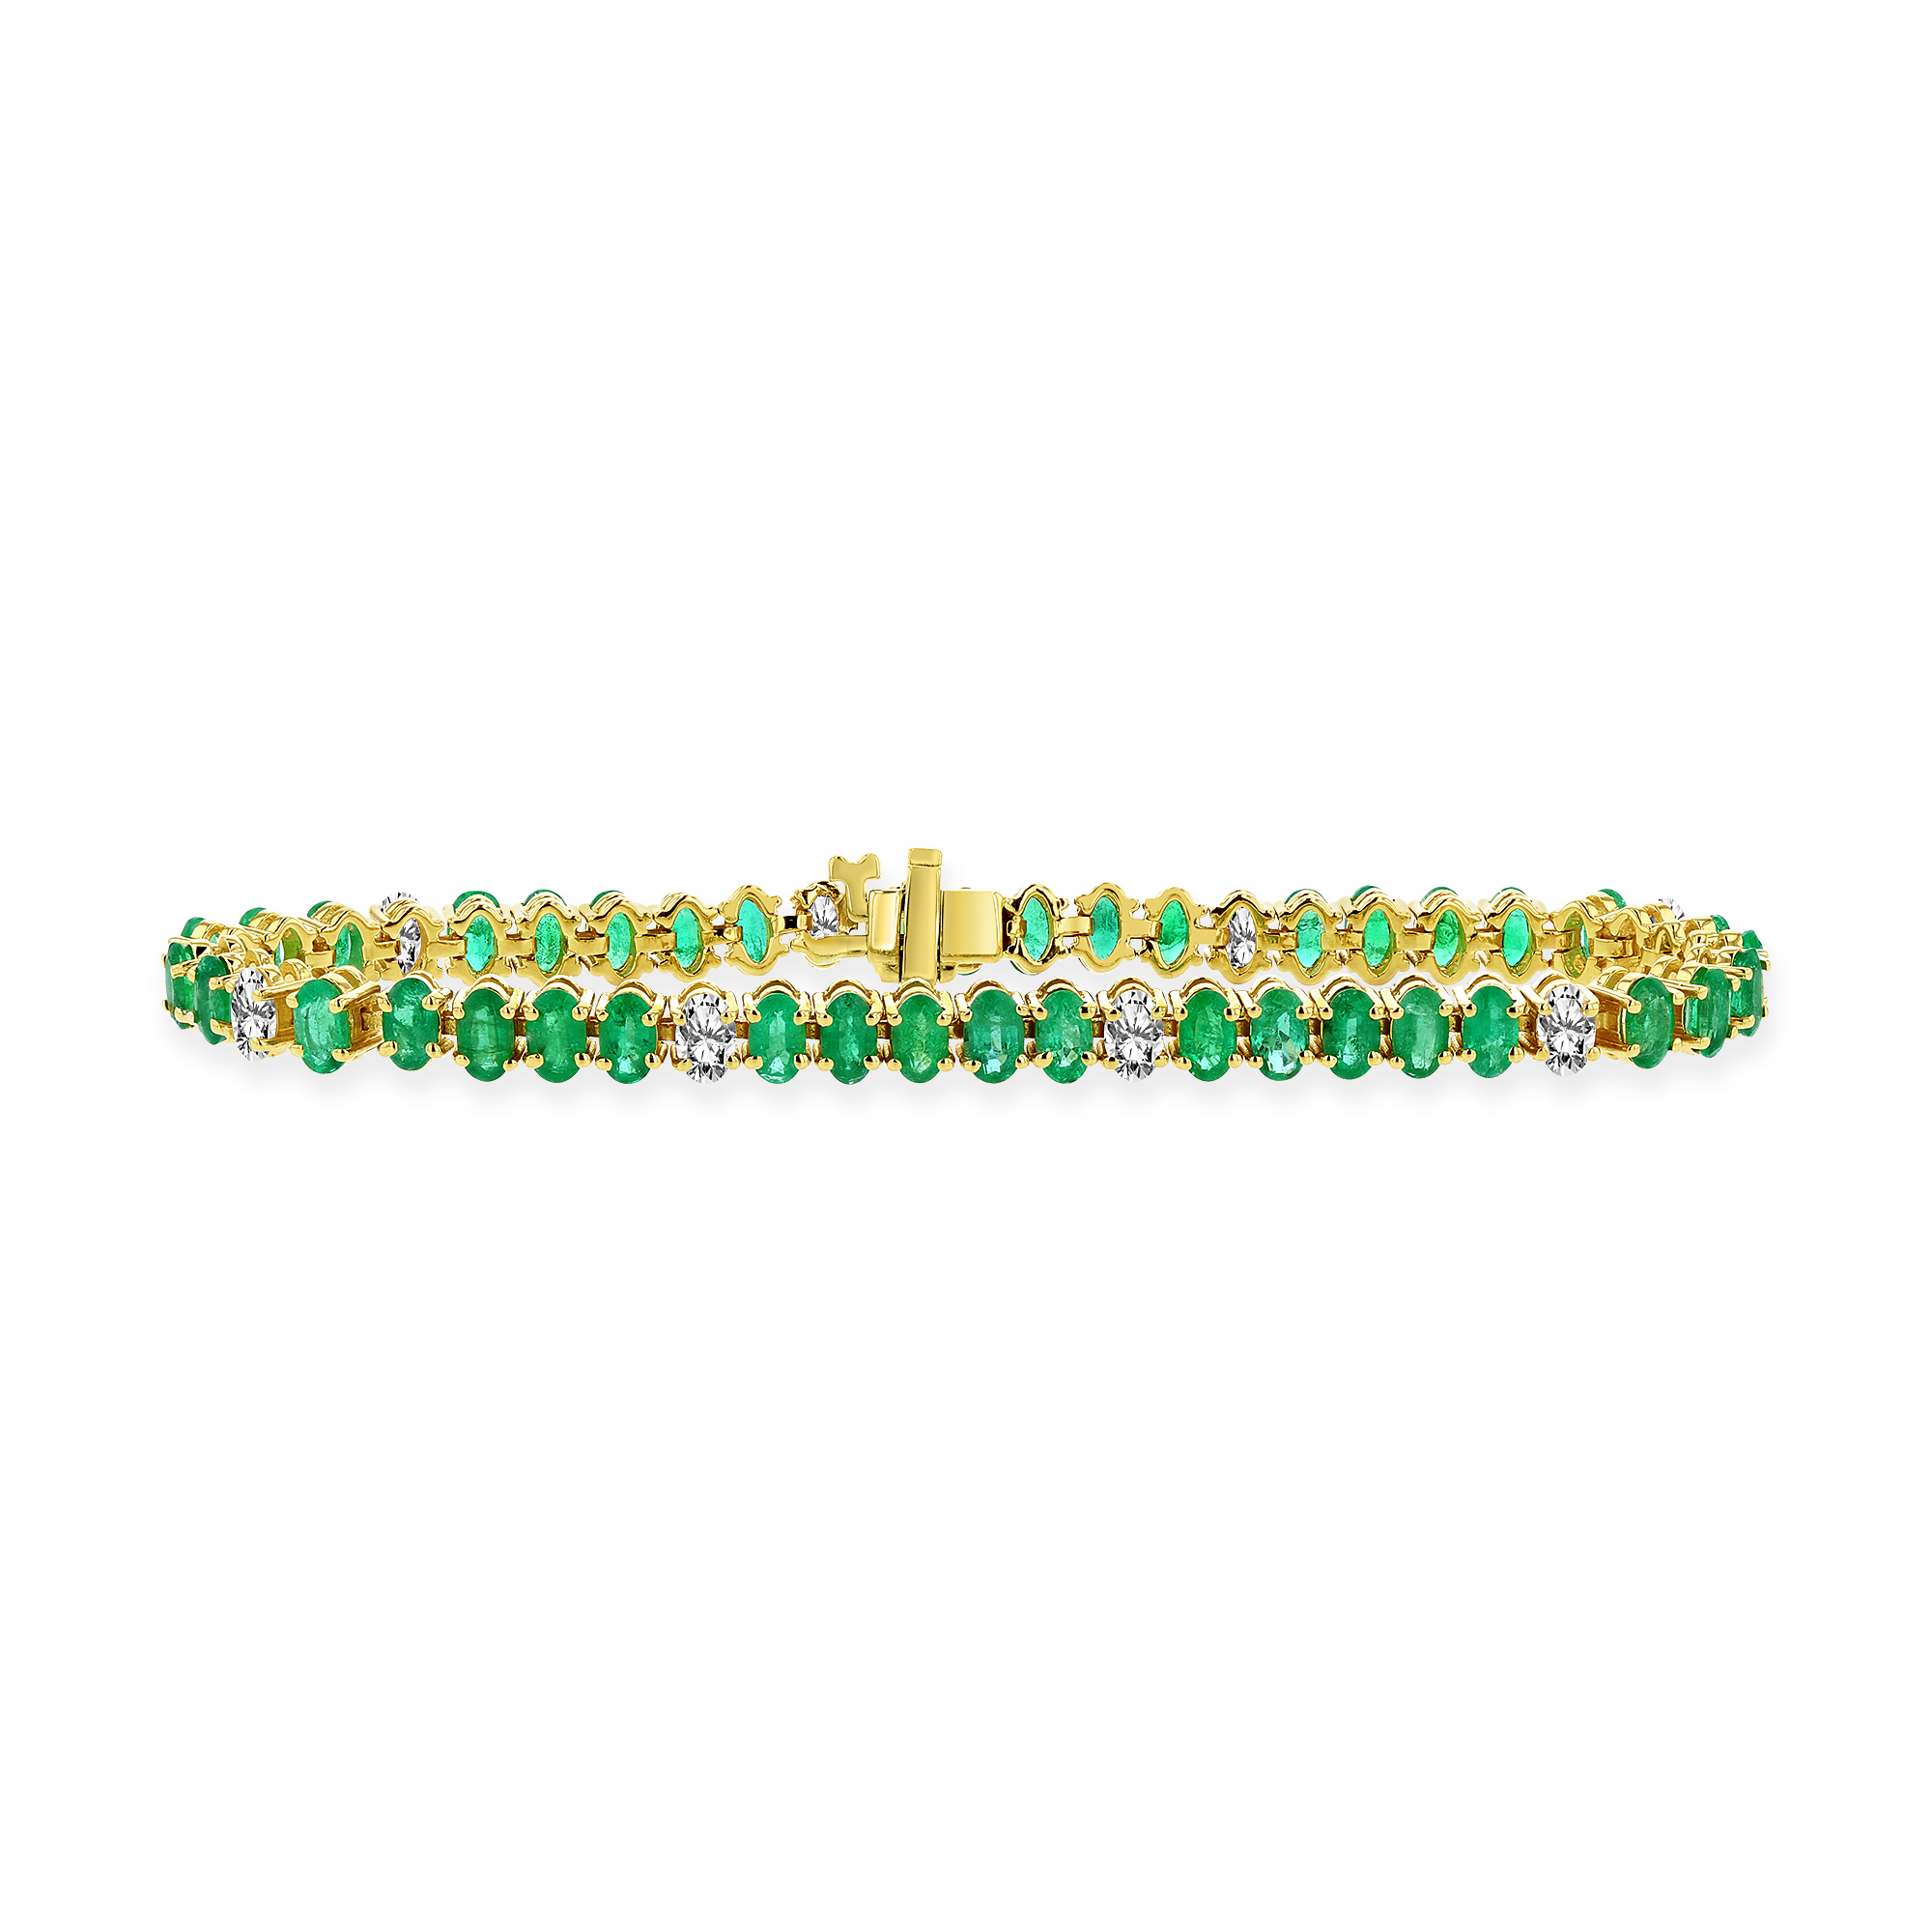 View 10.50ctw Ova Diamond and Emerald Tennis Bracelet in 14k Gold